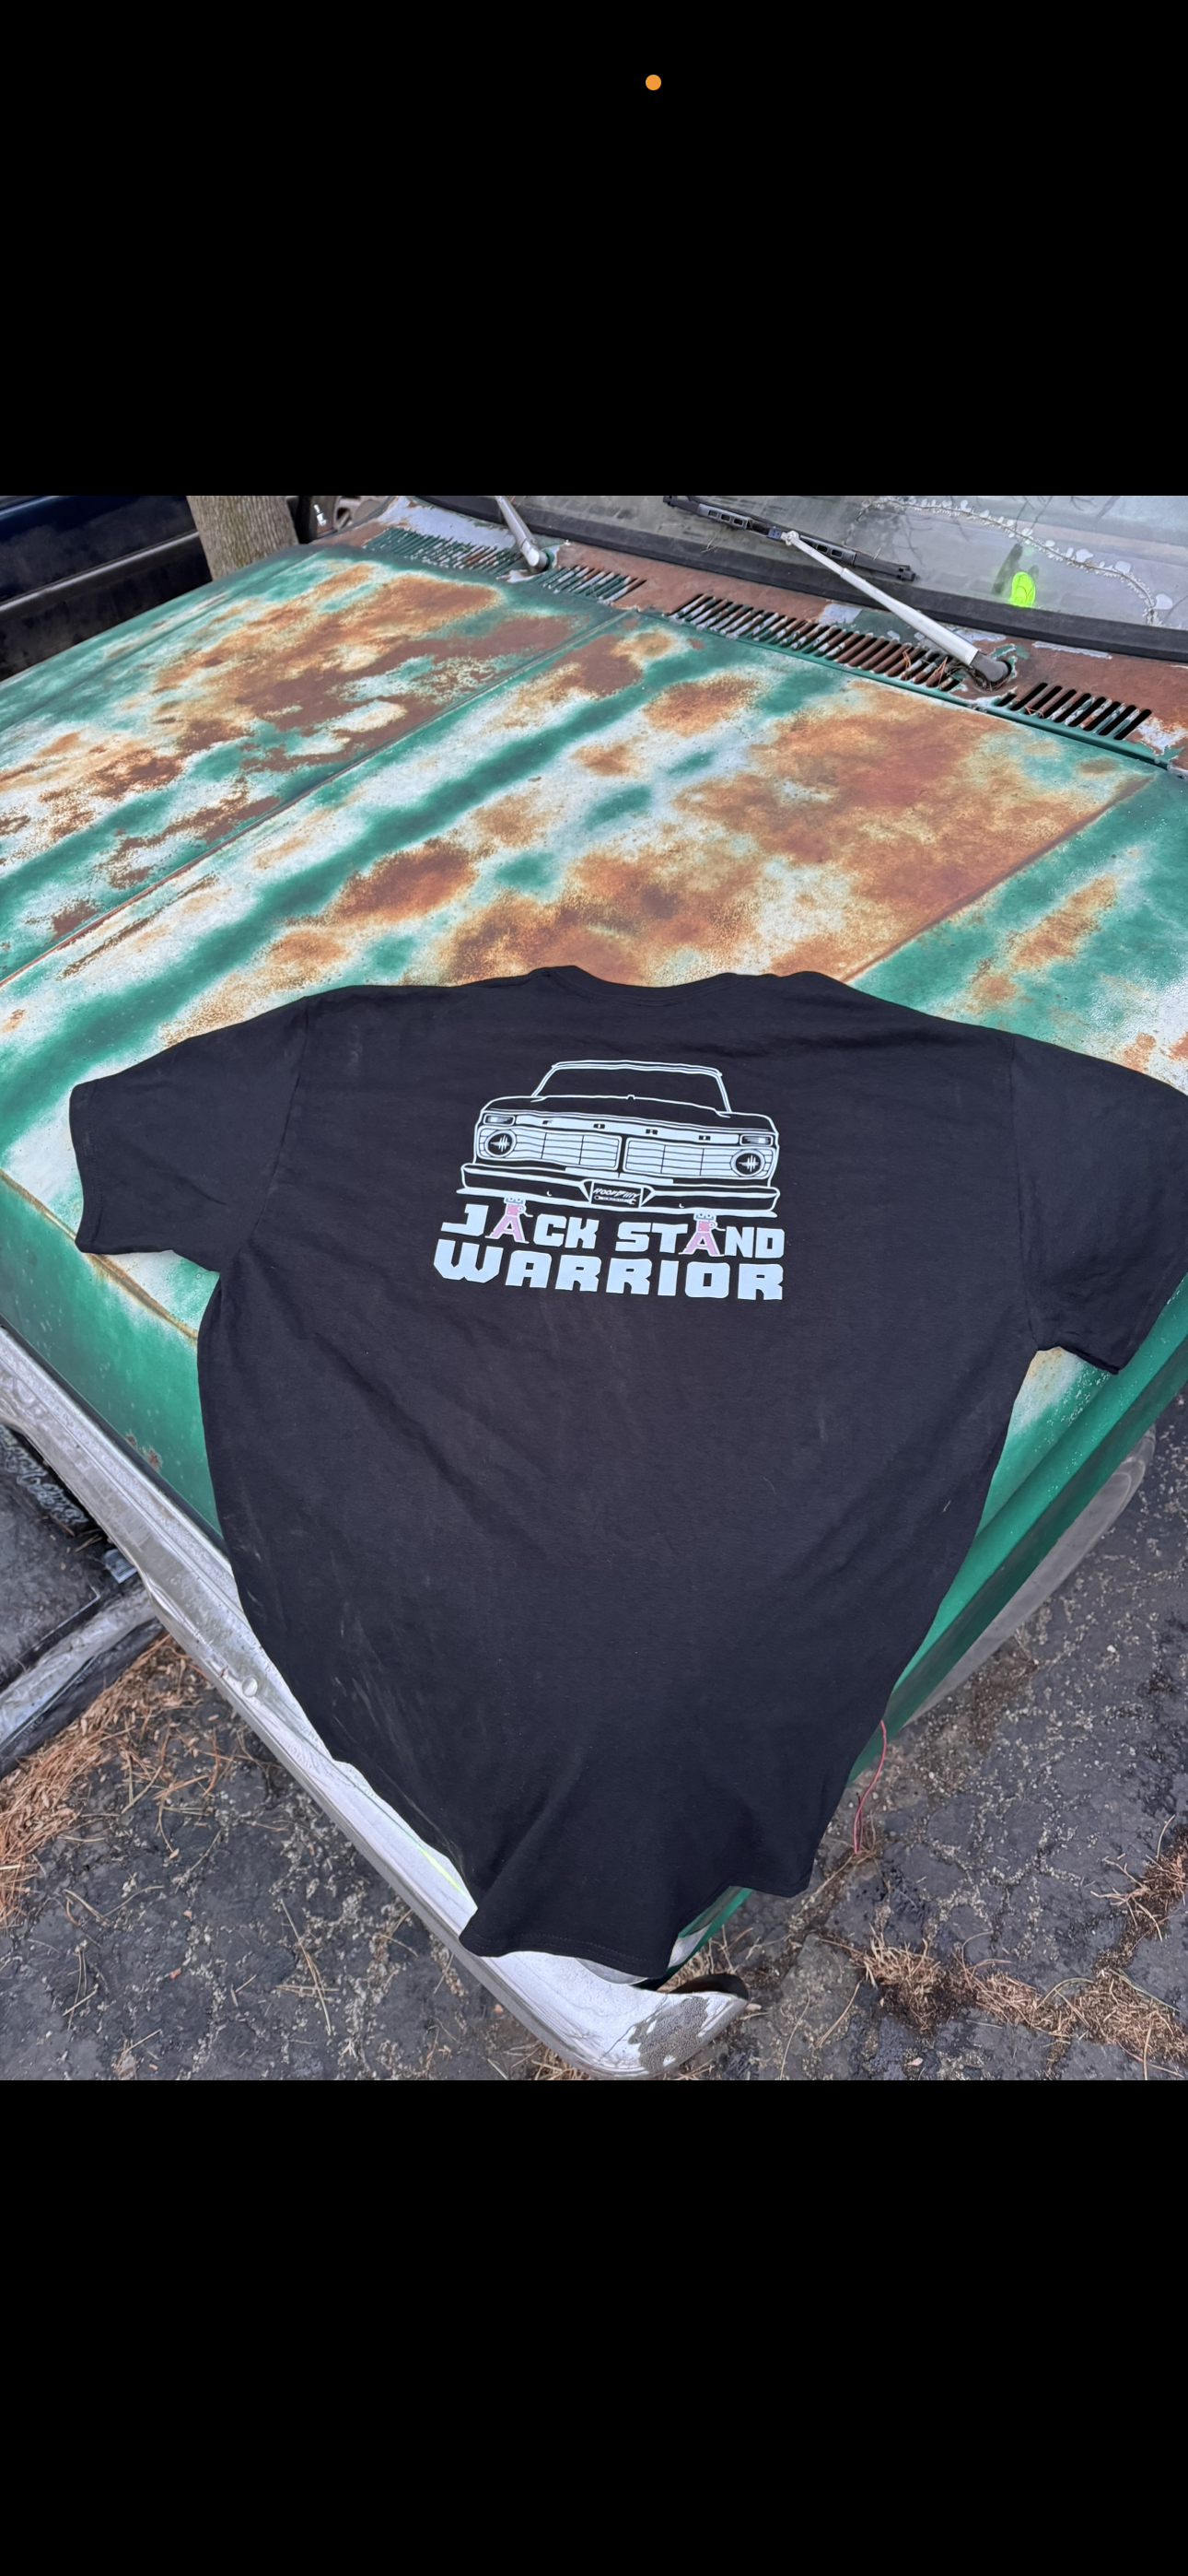 Shirts “Jackstand Warriors”